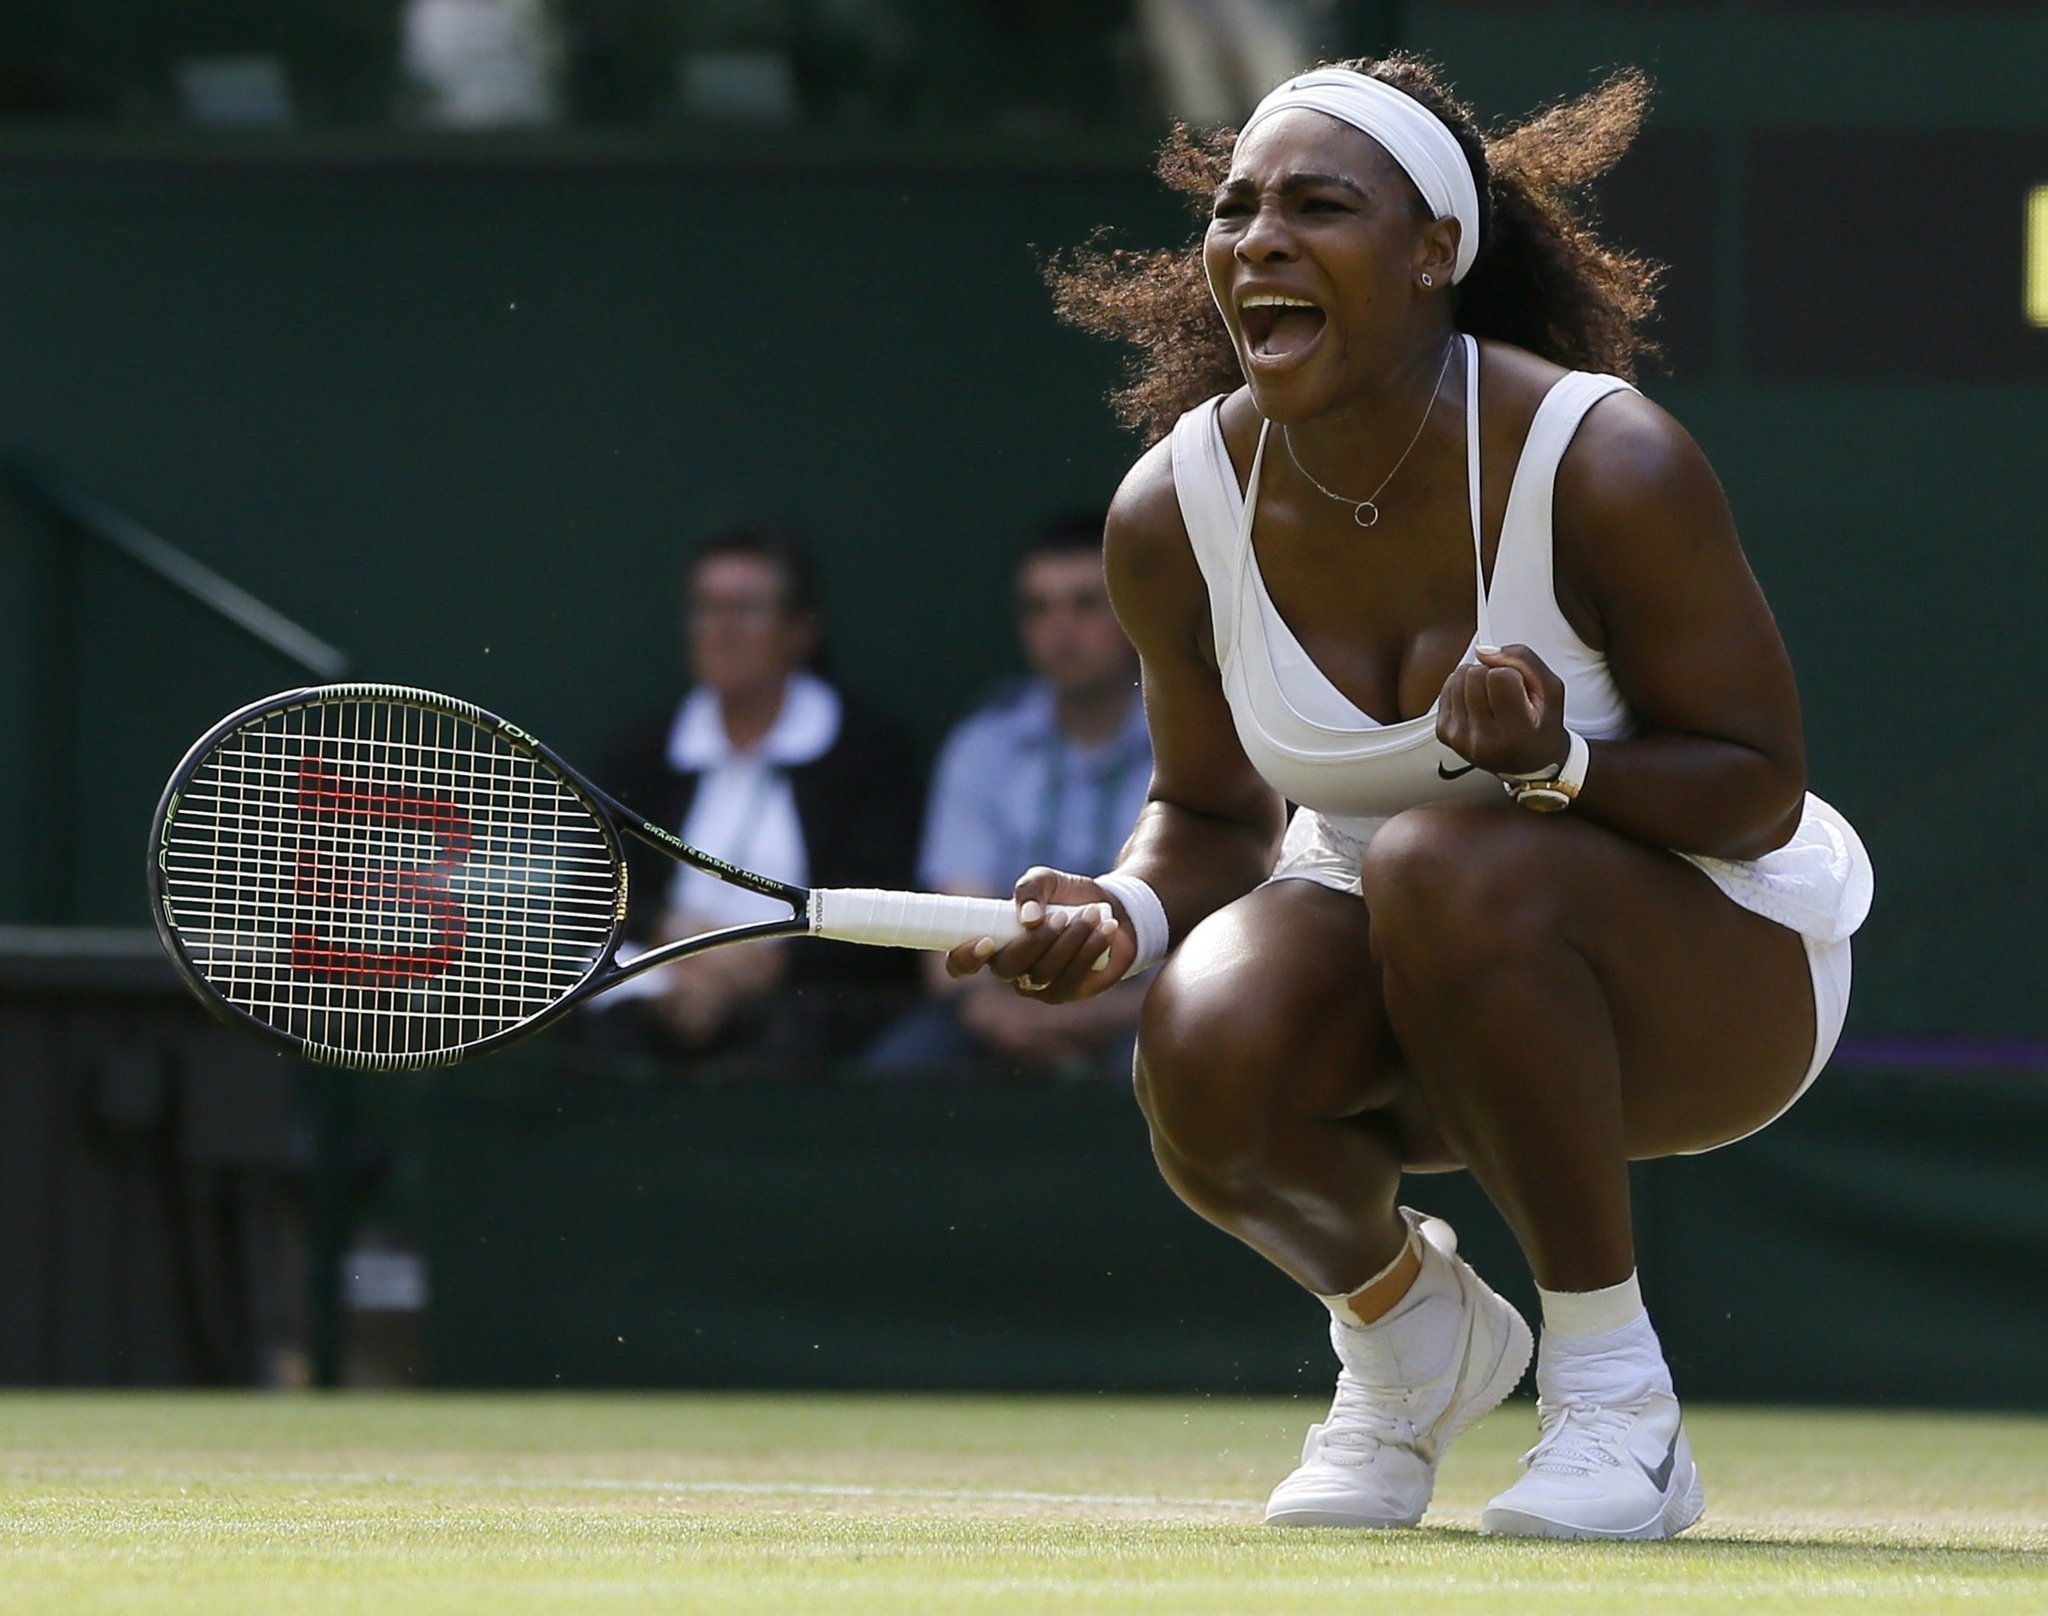 Serena Williams battles back to beat Heather Watson at Wimbledon - Chicago Tribune2048 x 1616